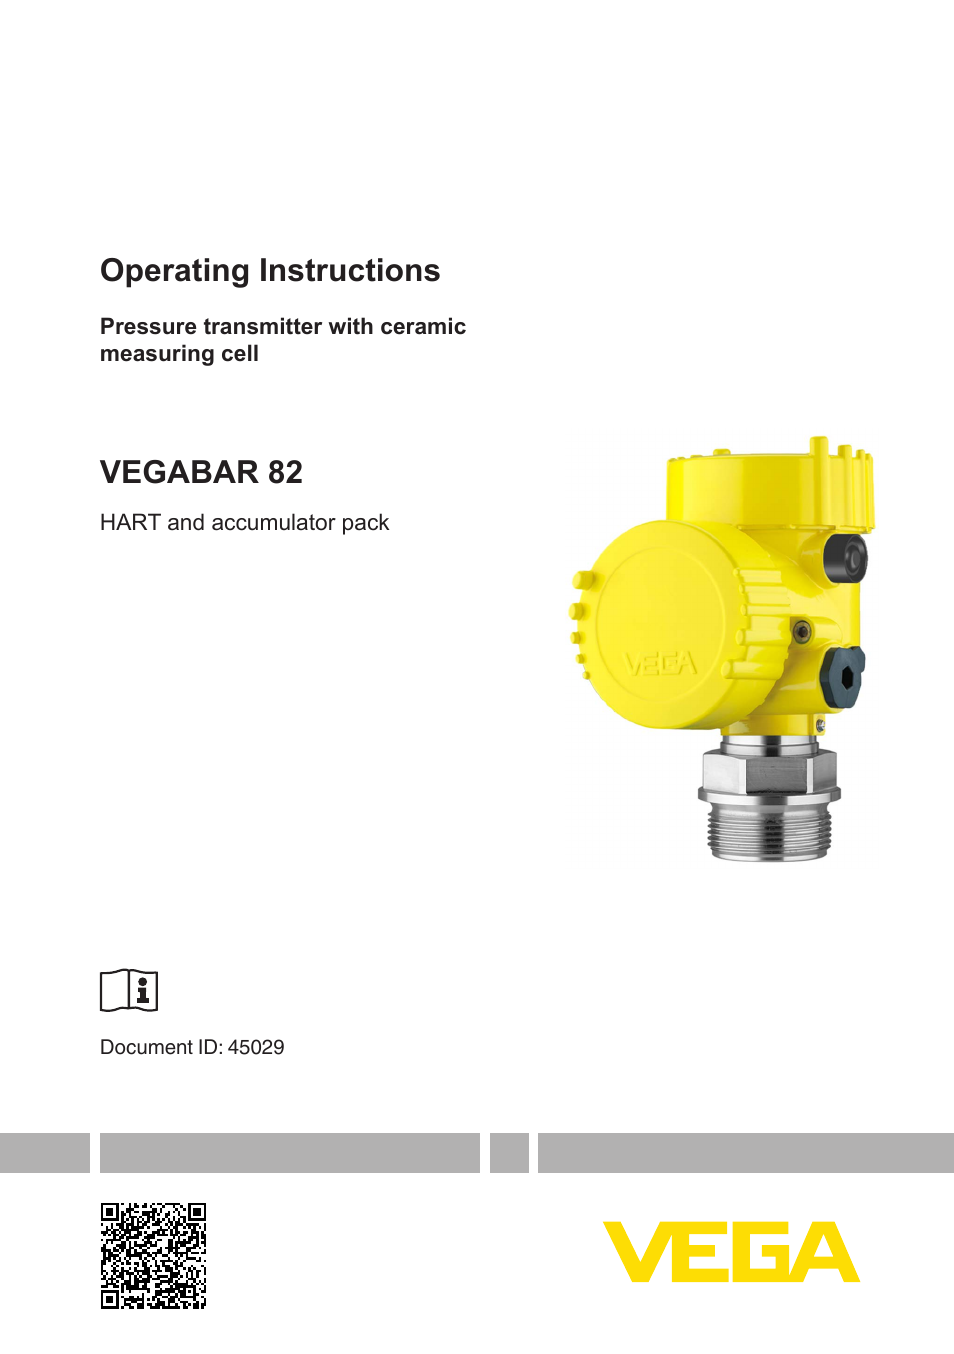 VEGABAR 82 HART and accumulator pack - Operating Instructions